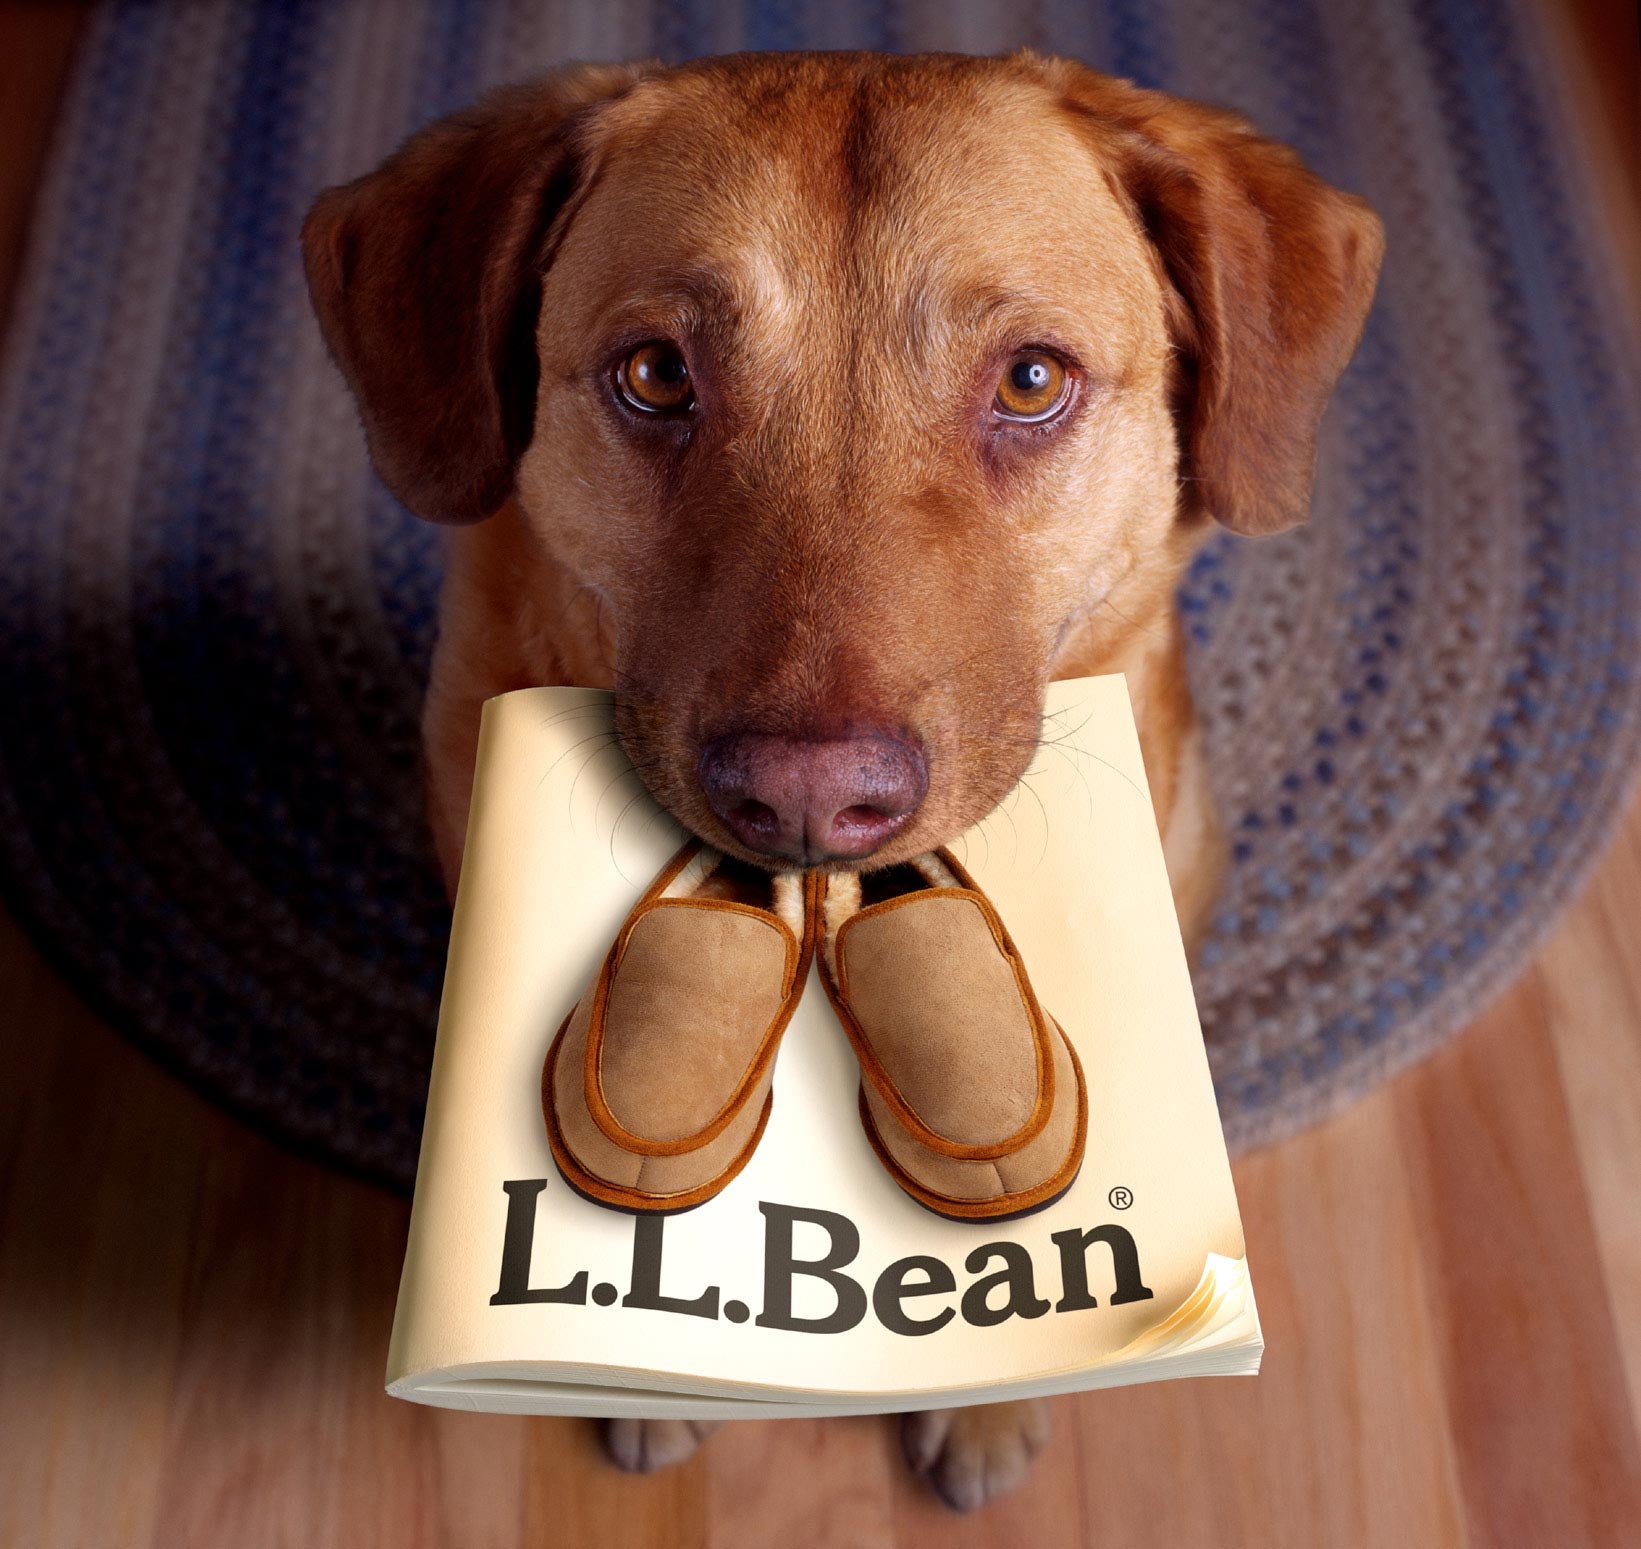 ll-bean-dog-w-slippers.jpg